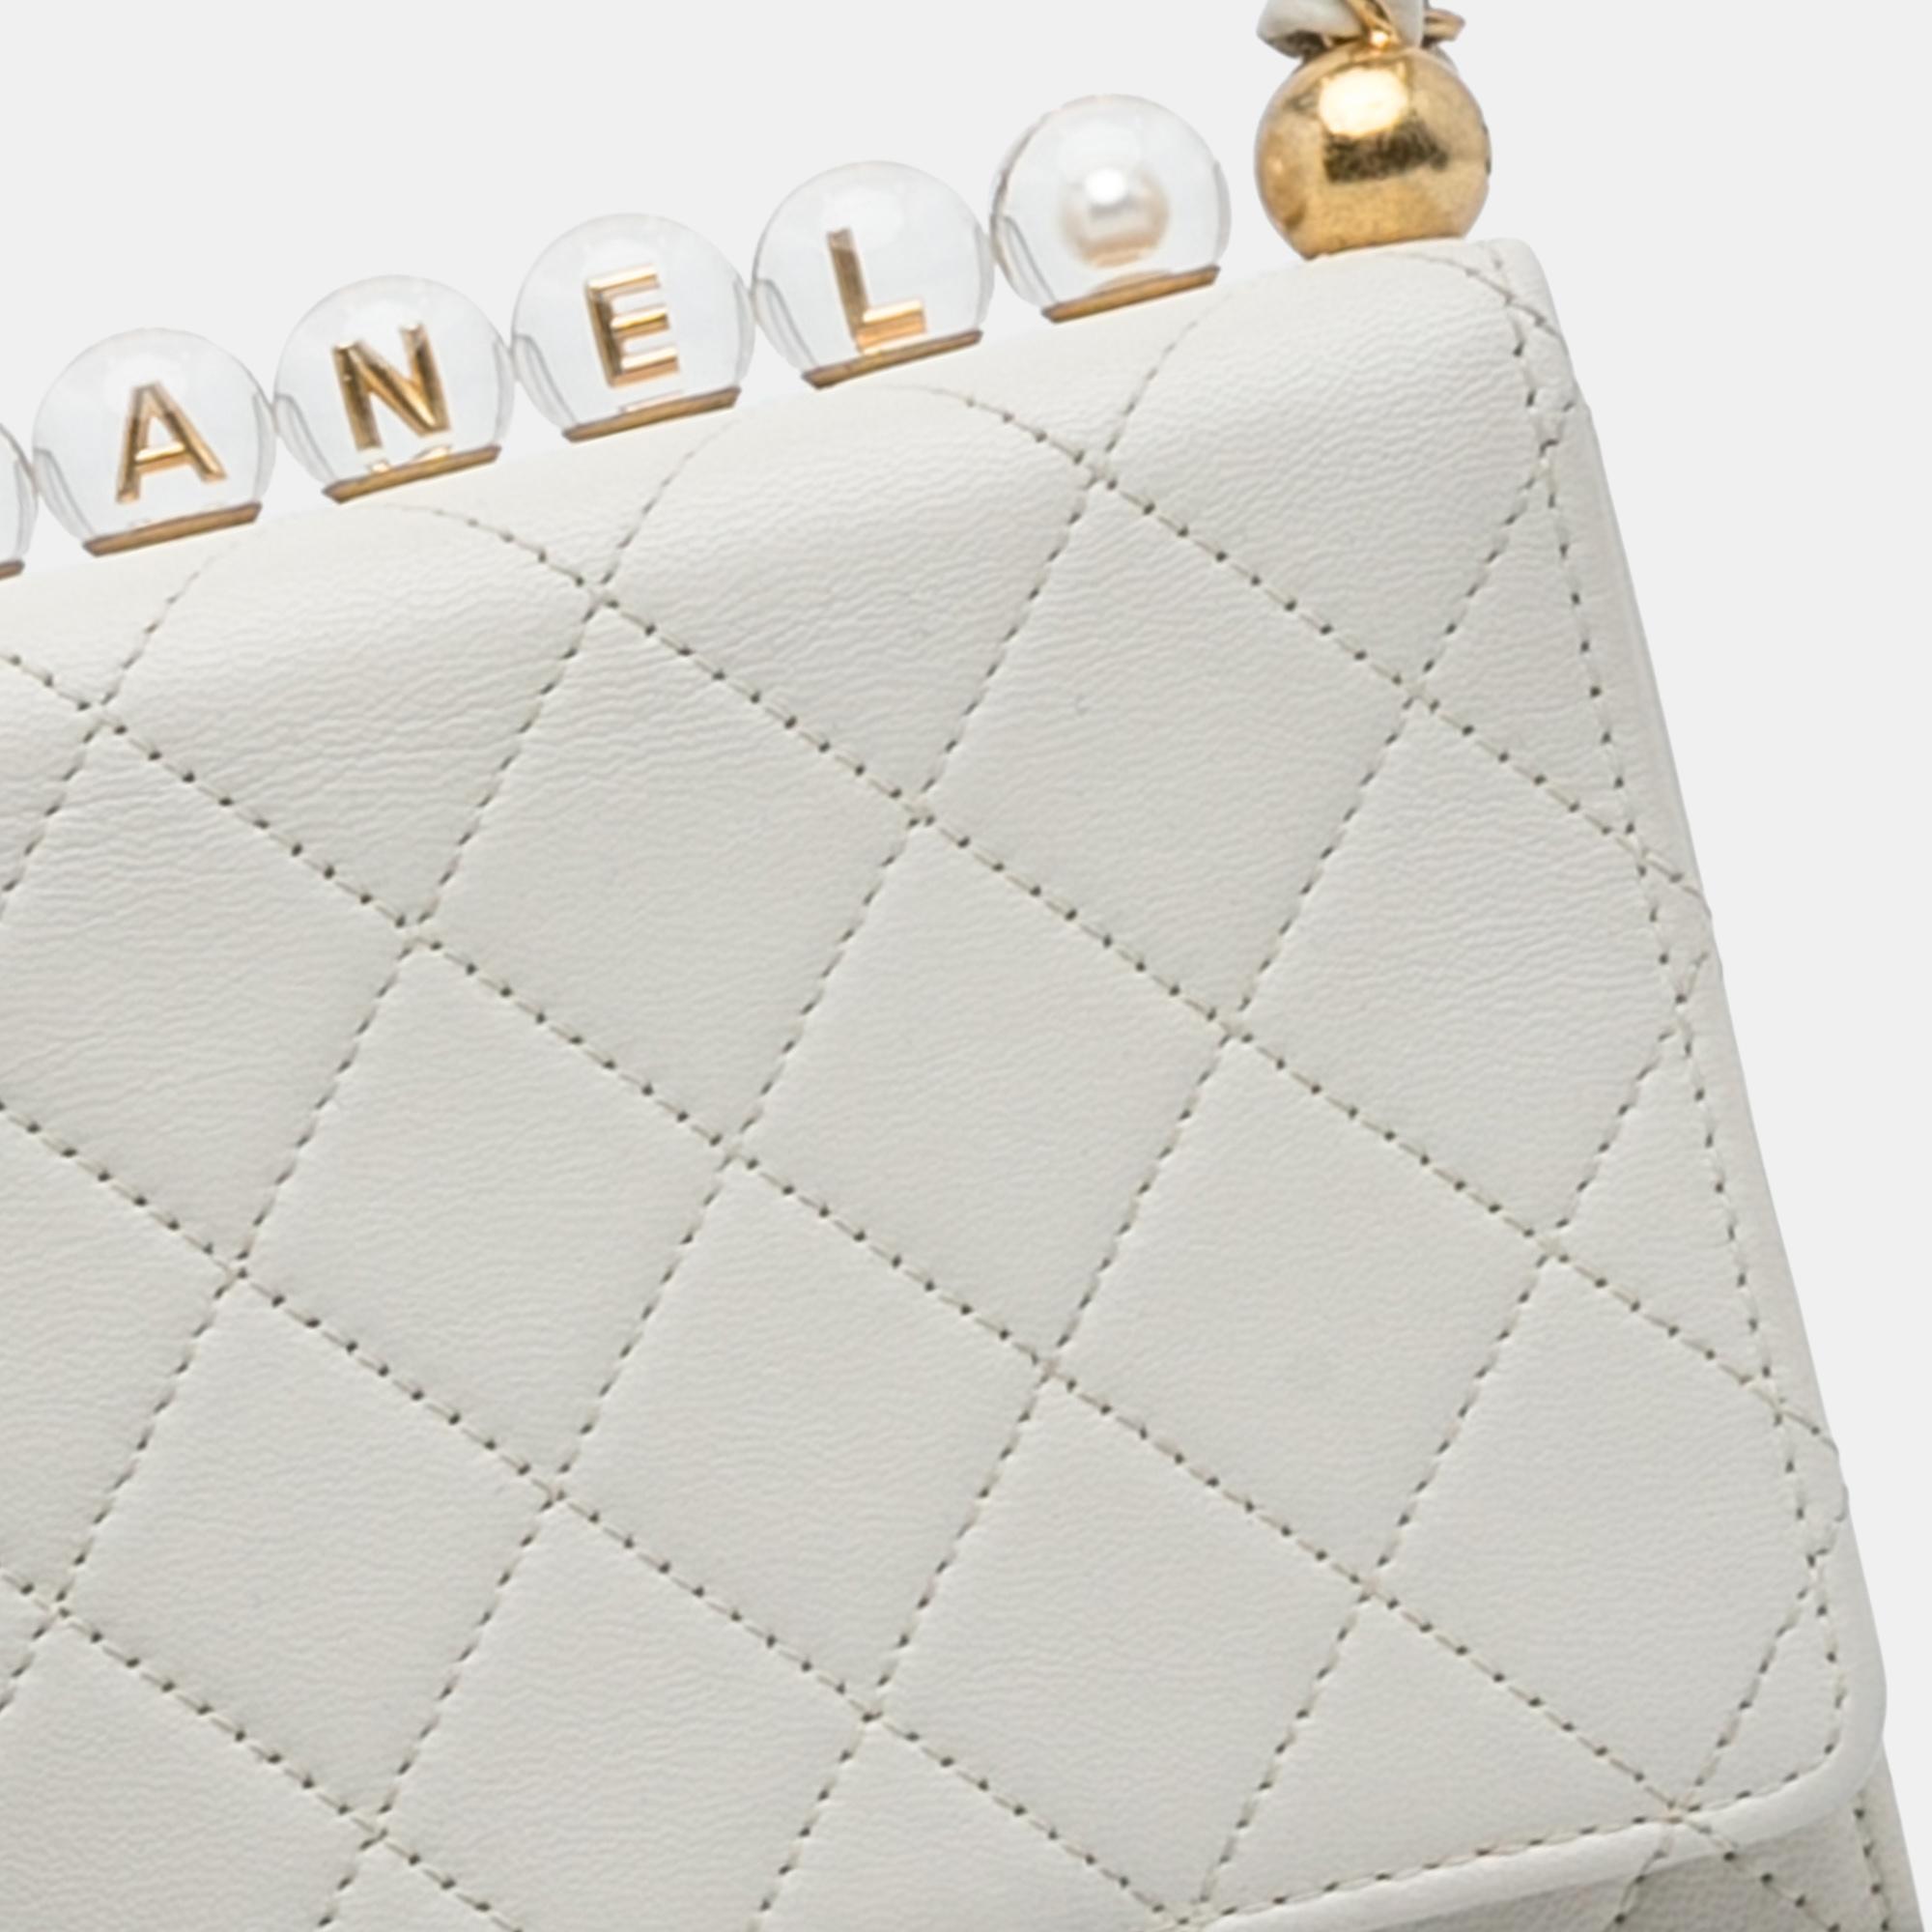 Chanel White Mini Chic Pearls Crossbody